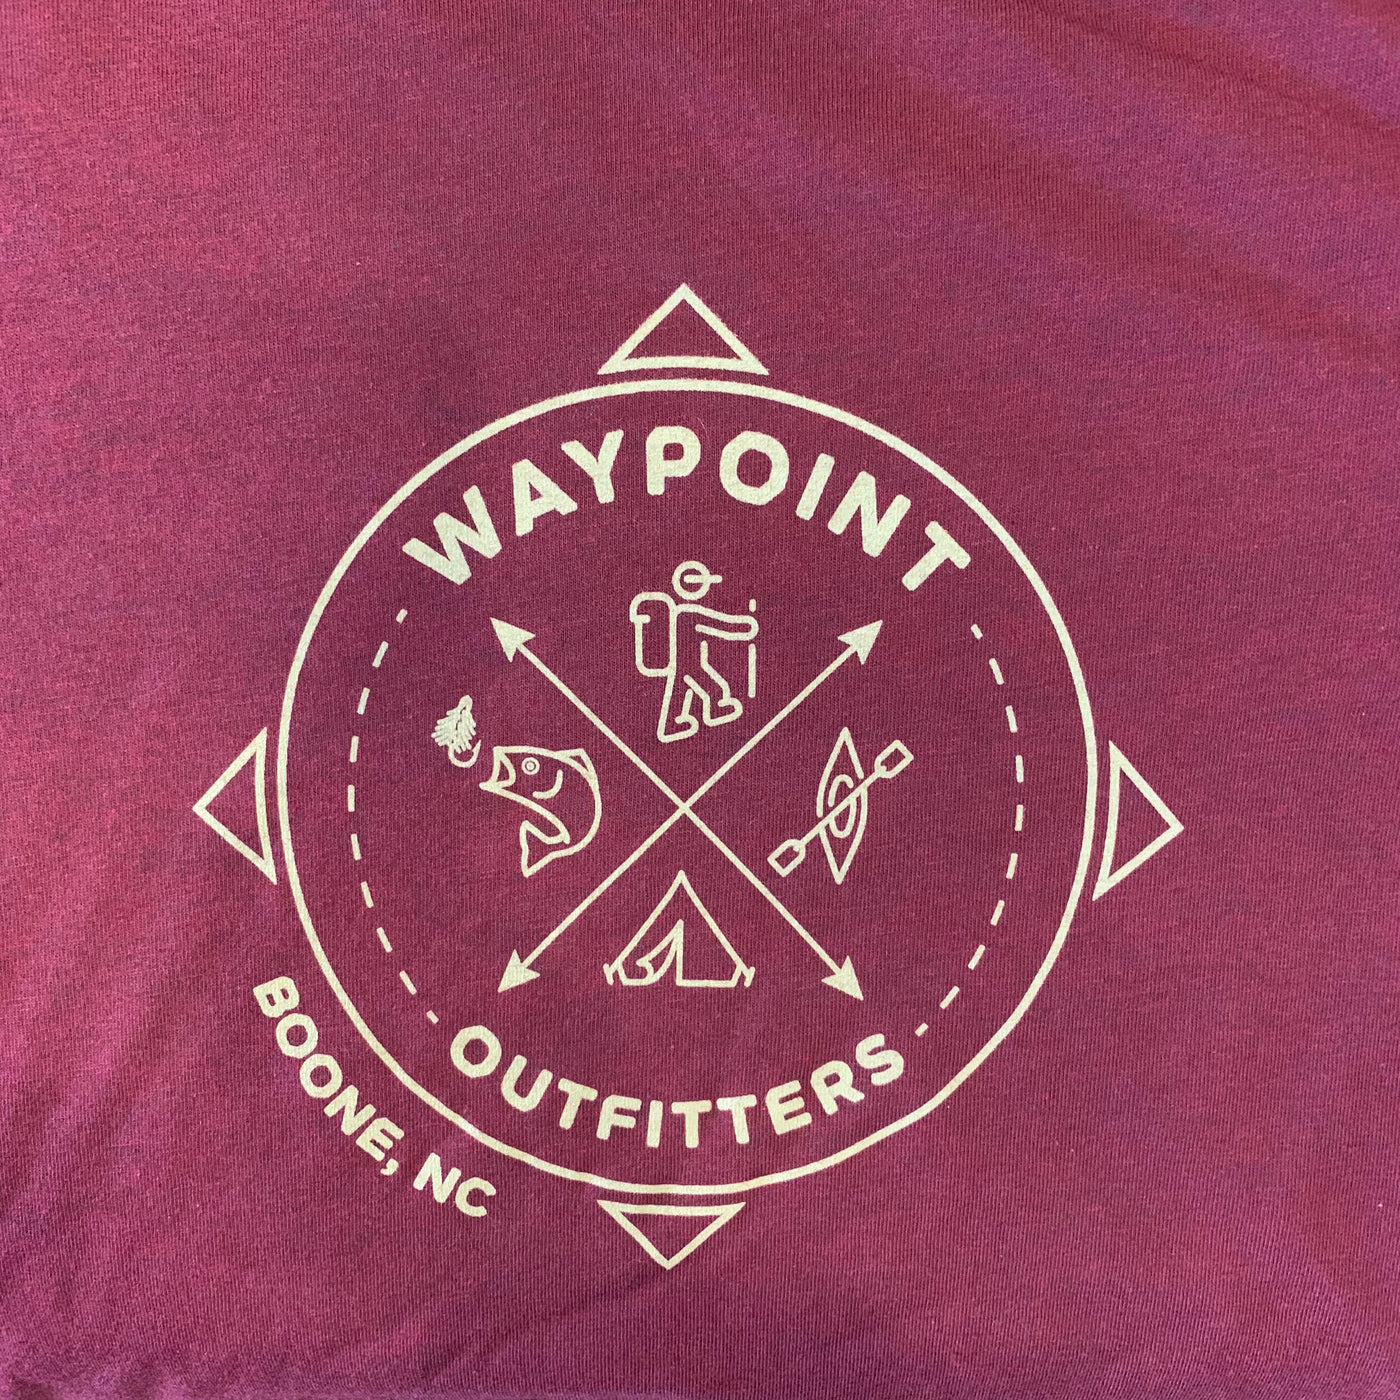 Waypoint Original Logo Tee Short Sleeve